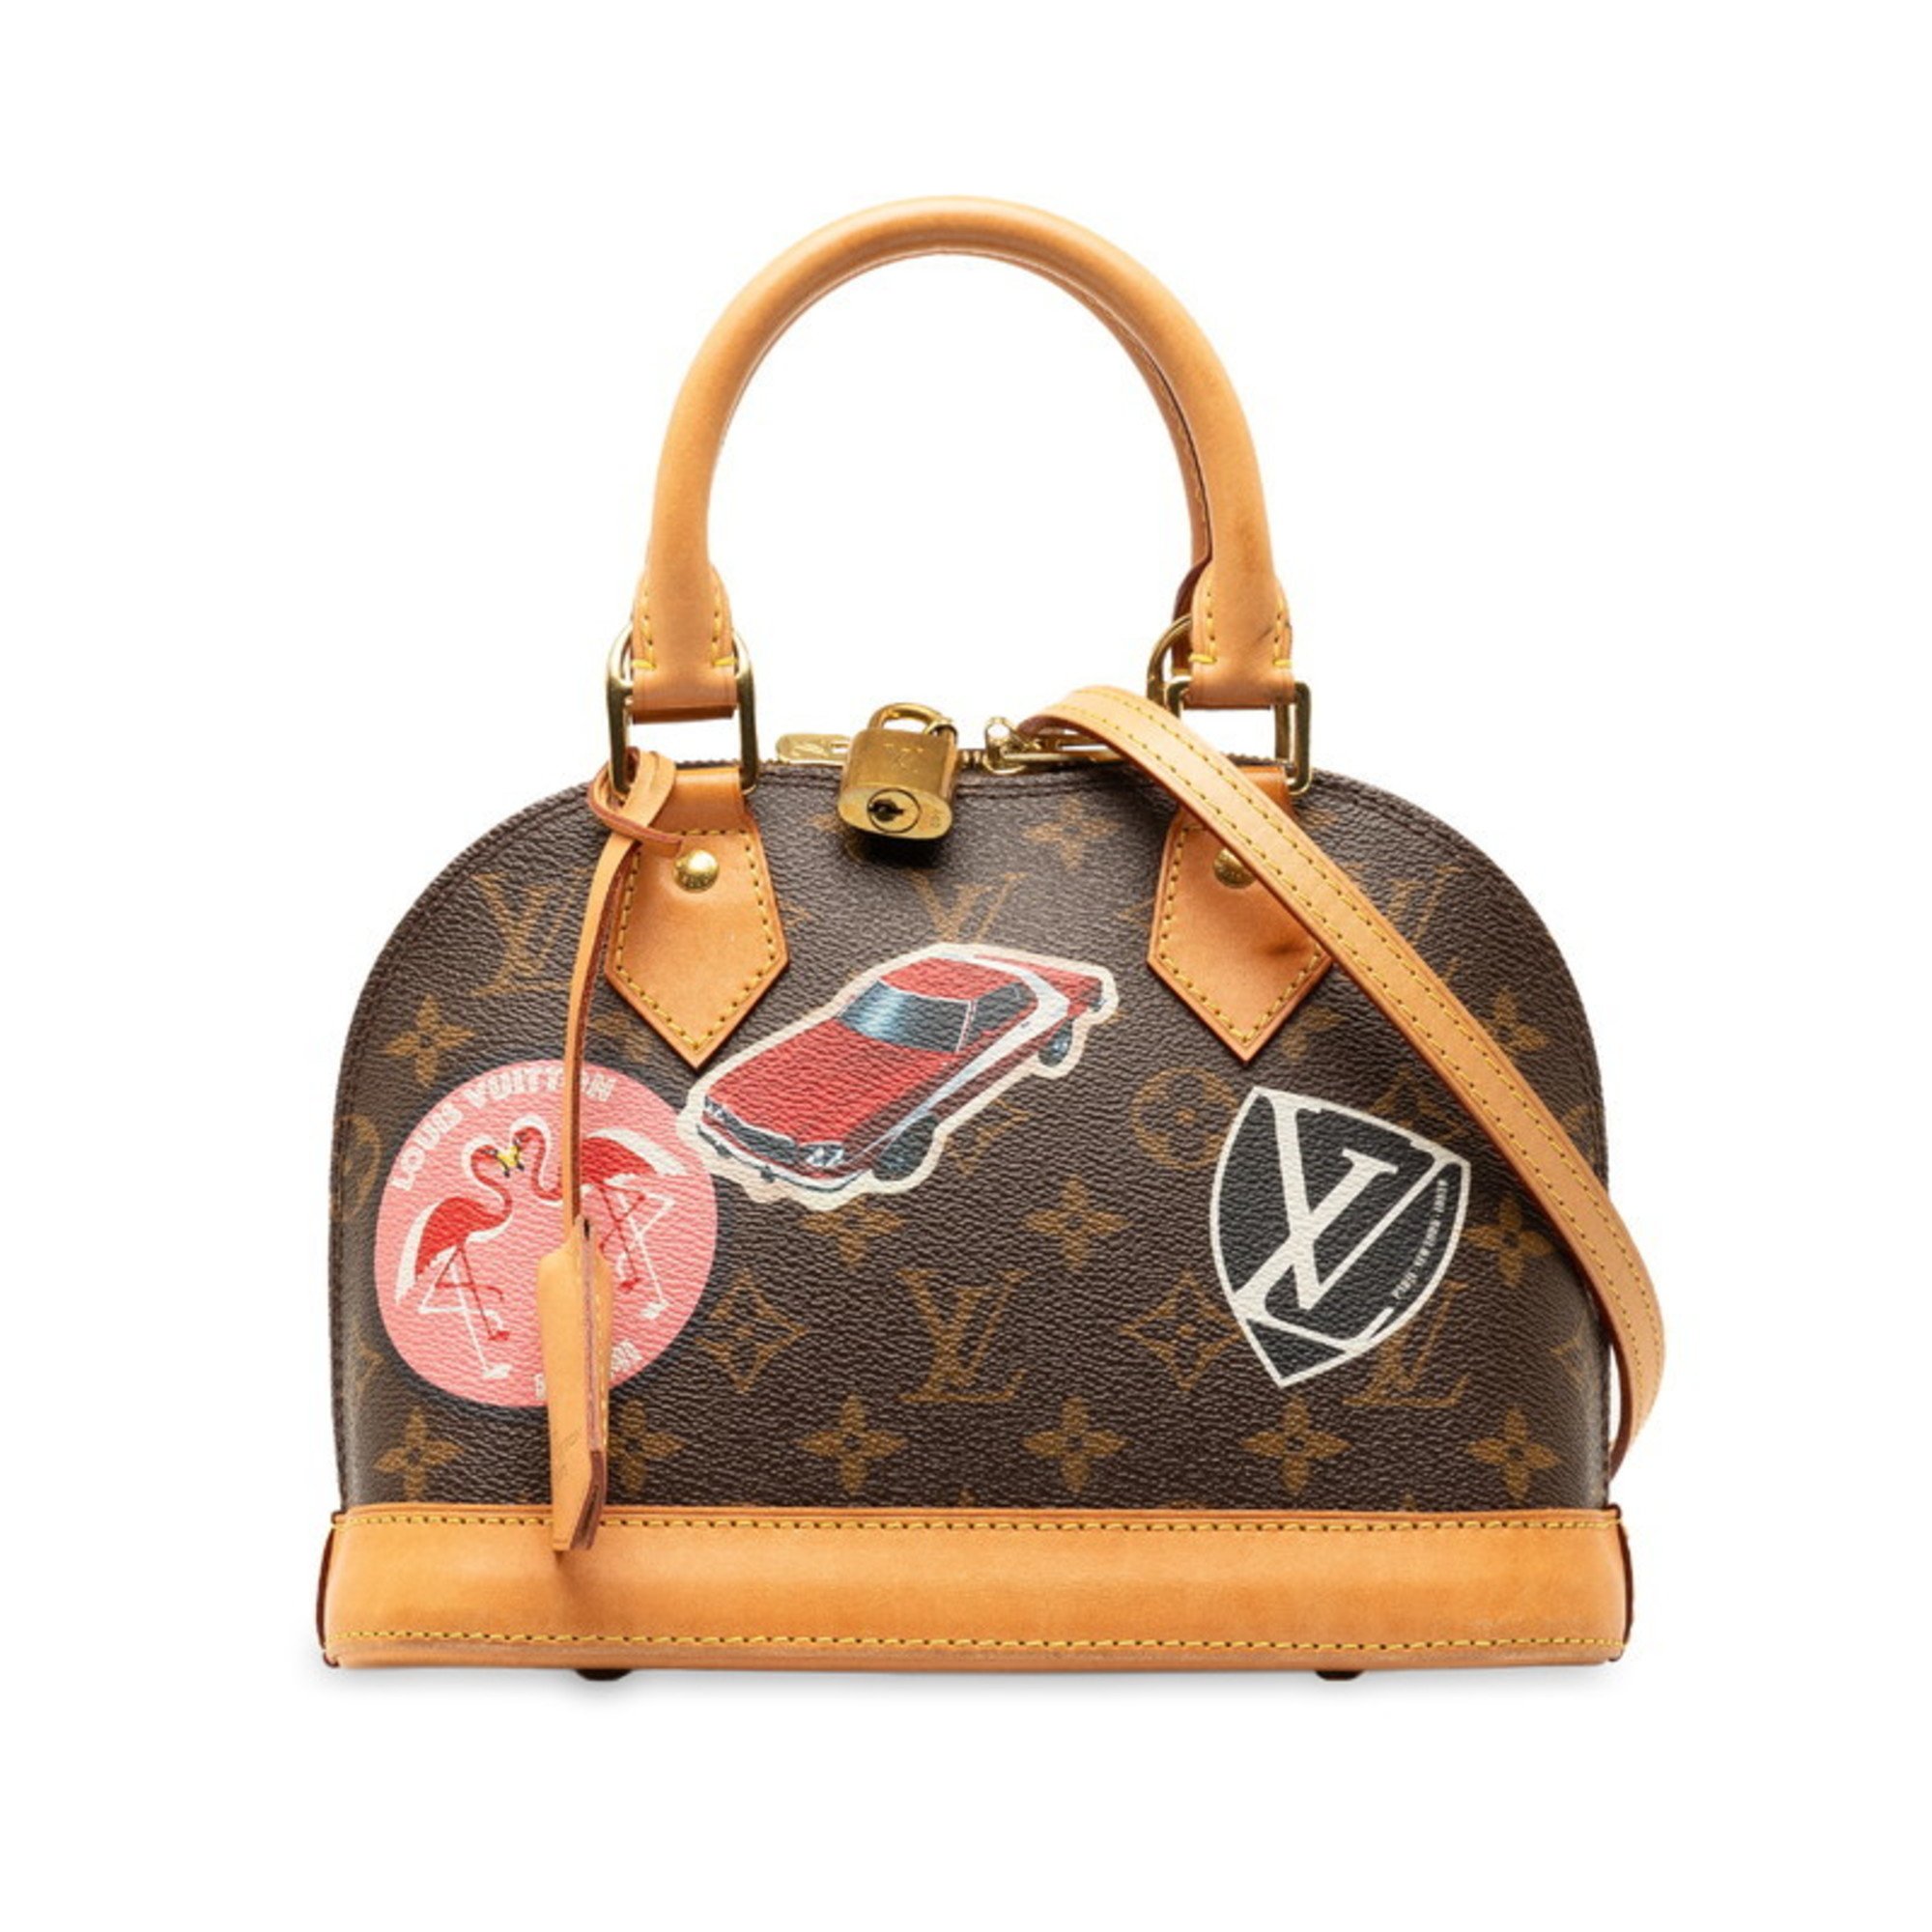 Louis Vuitton Monogram M43230 Women's Handbag,Shoulder Bag Brown,Monogram,Multi-color,Red Color